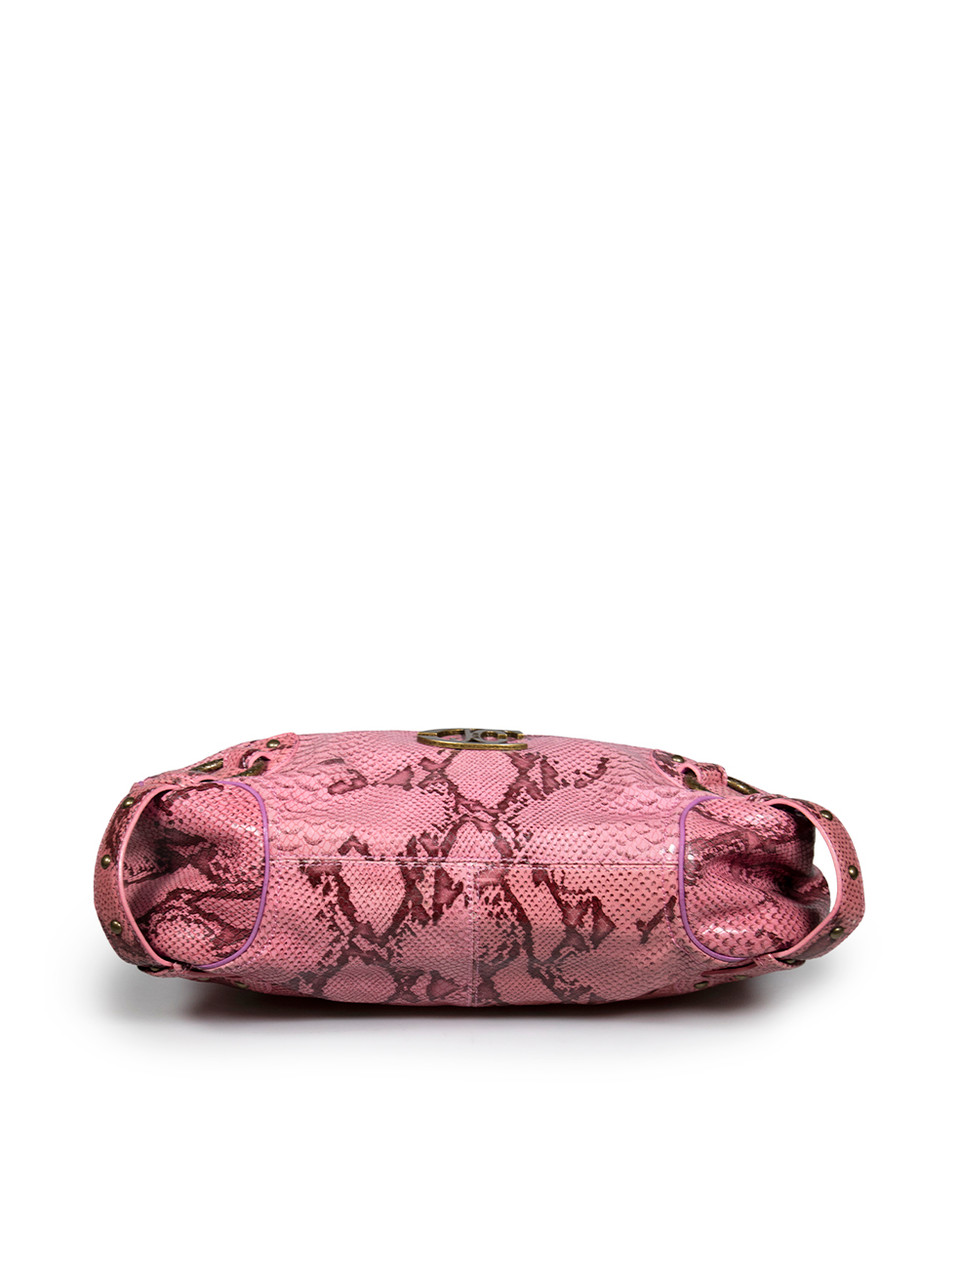 Roberto Cavalli Just Cavalli Pink Snake Embossed Leather Shoulder Bag